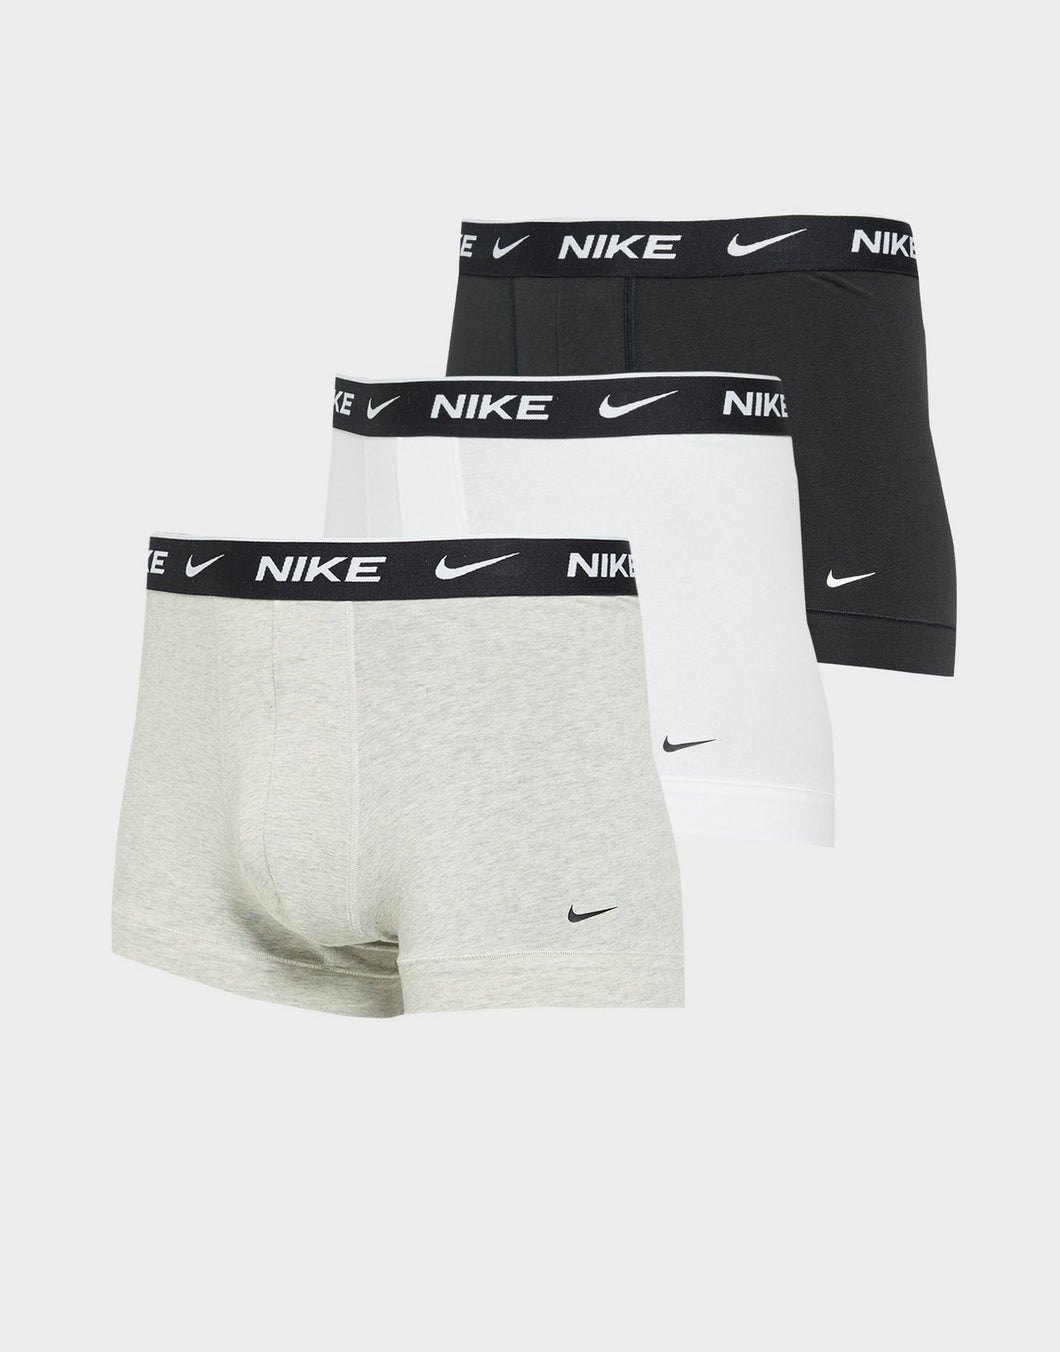 Nike Everyday Cotton Stretch Men's Boxer Briefs